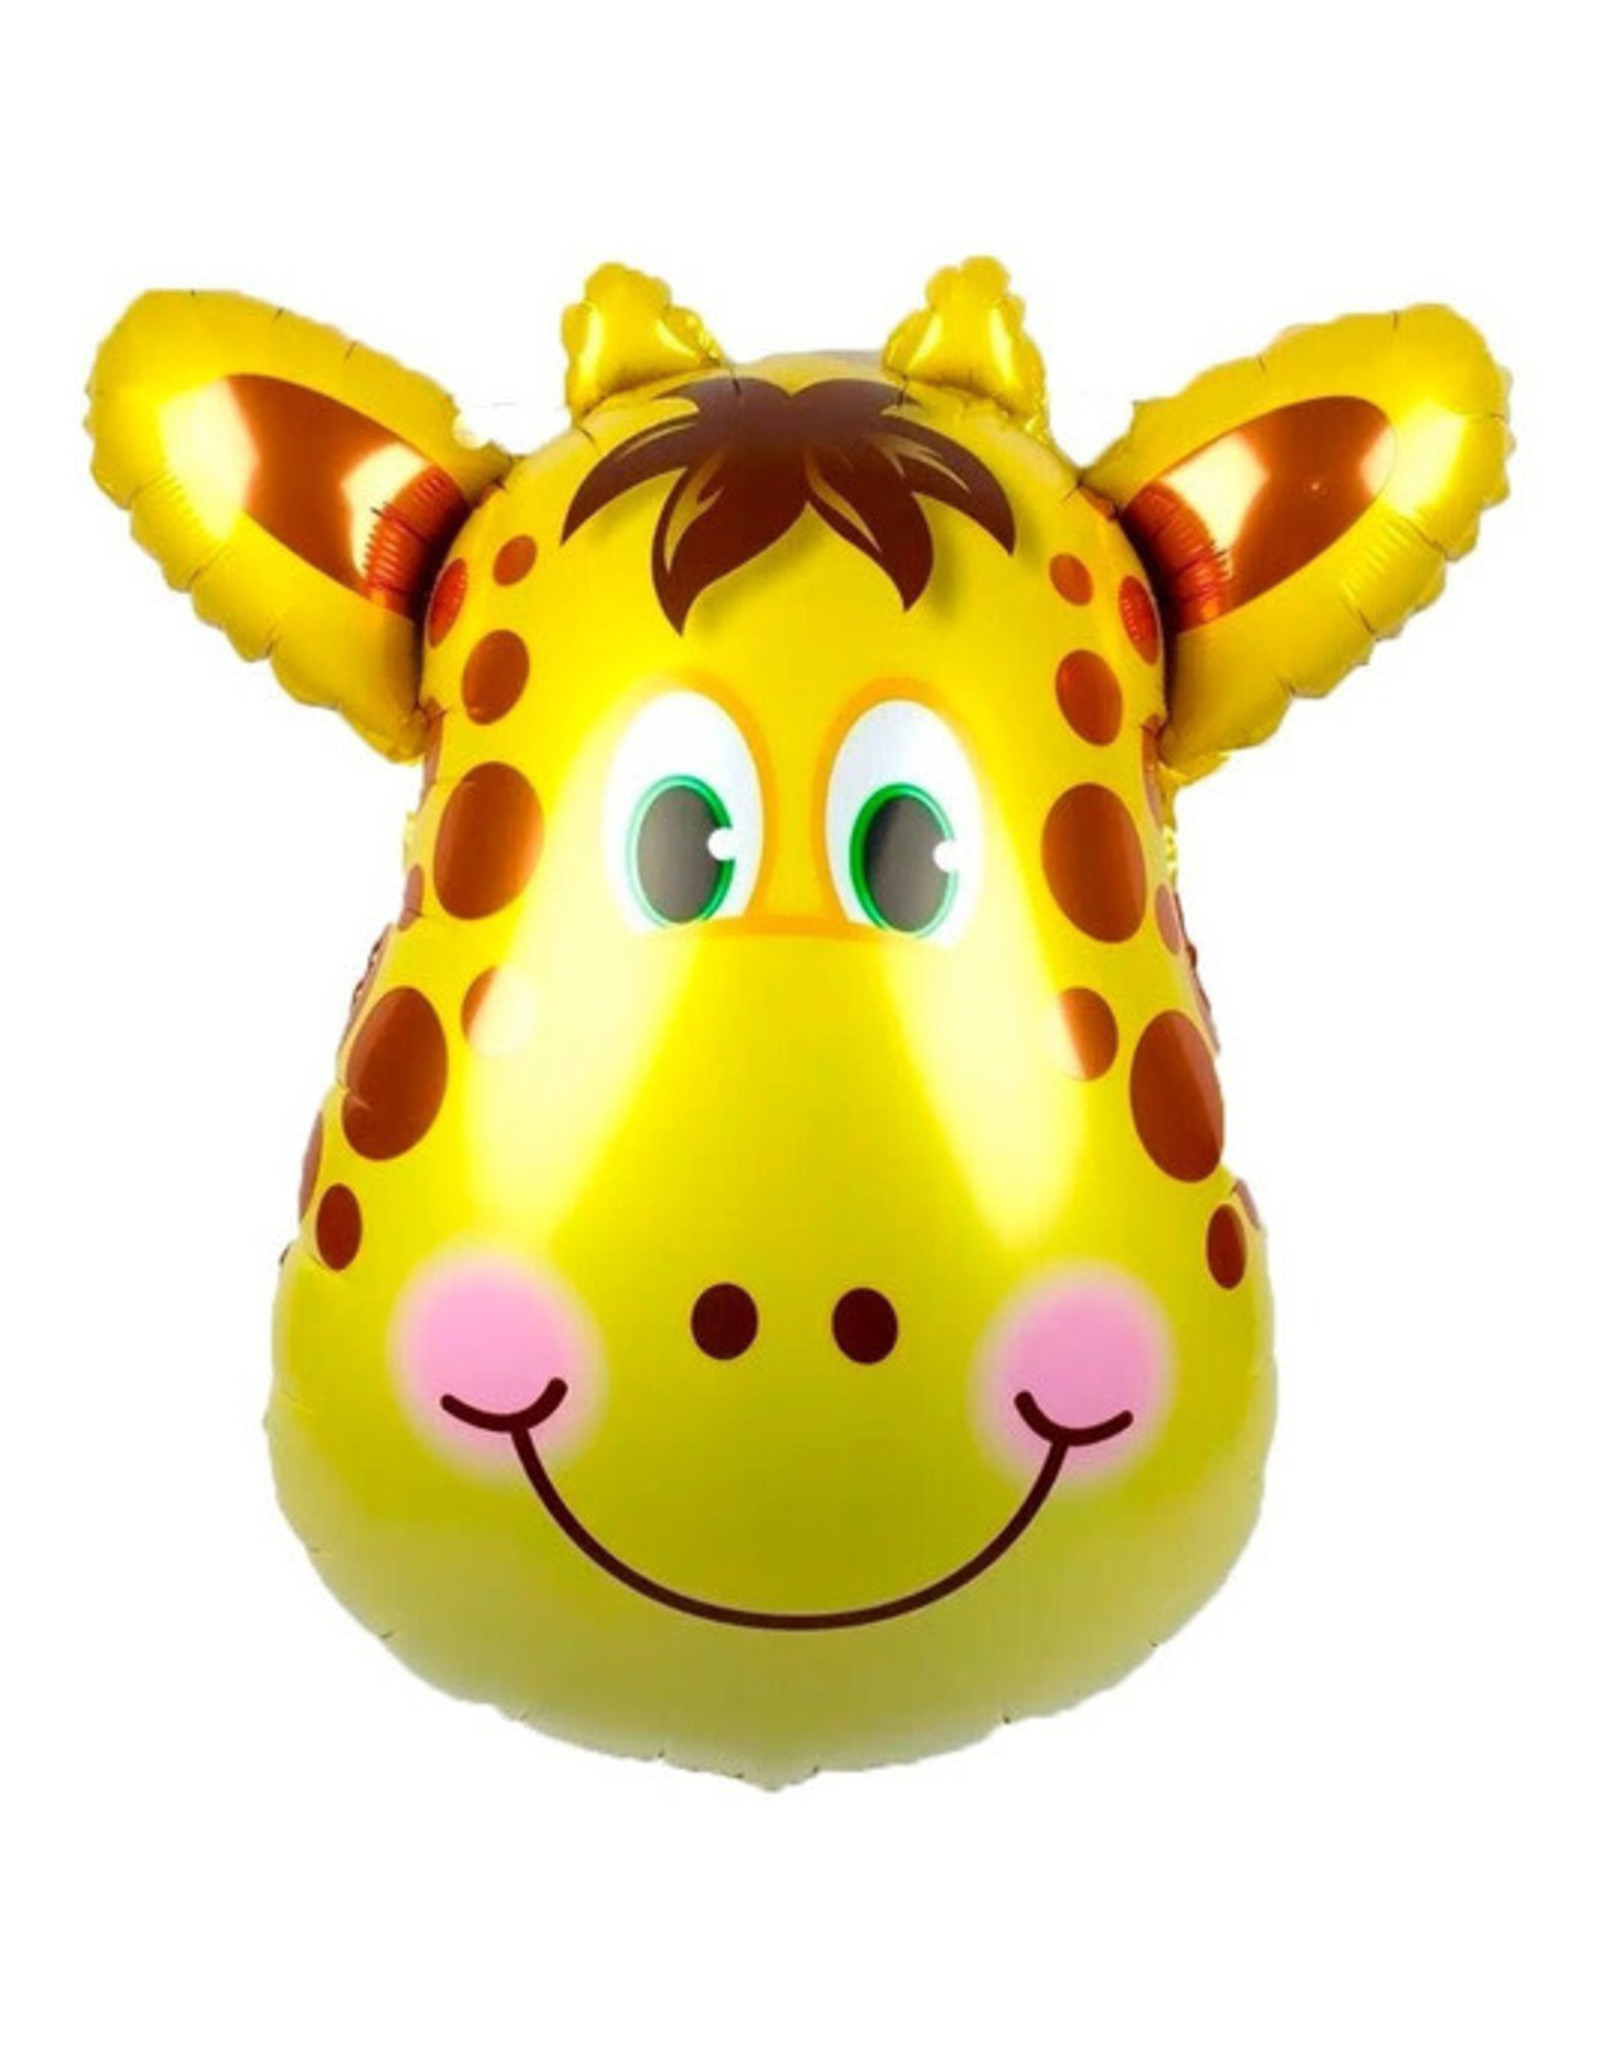 Qualatex Giraffe Shaped Folie Ballon